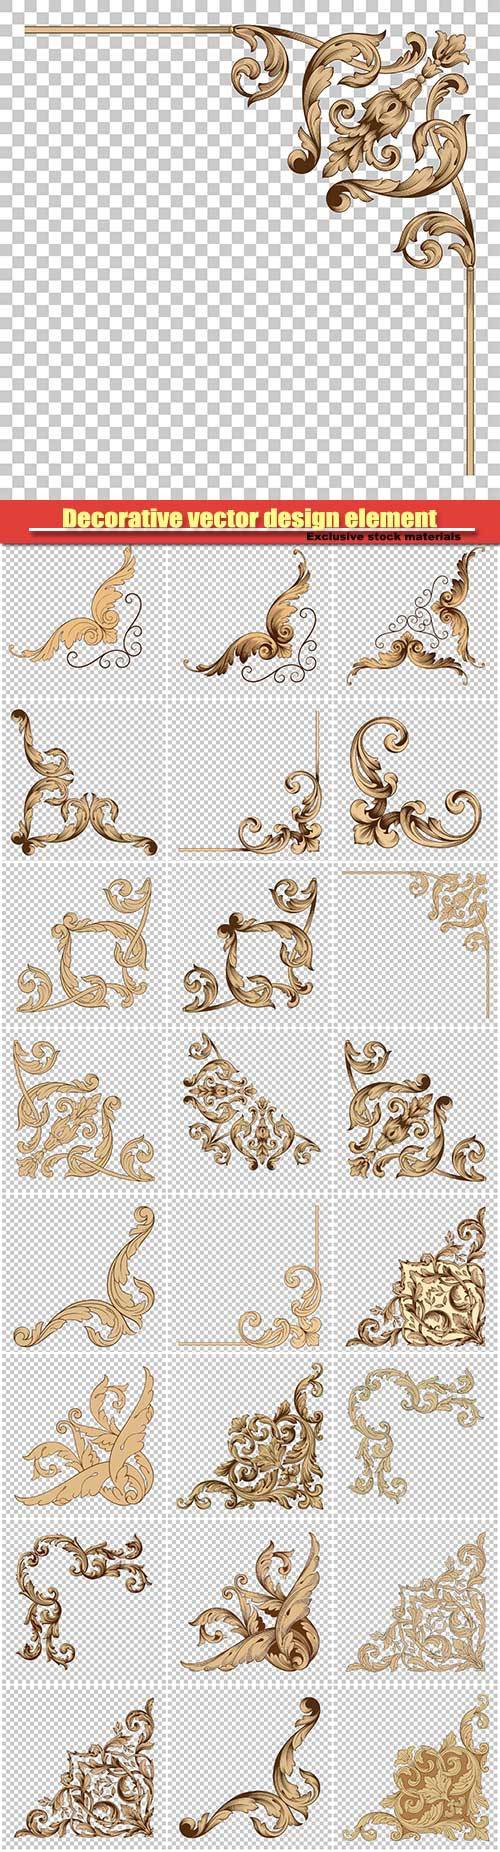 Decorative vector design element, vintage baroque ornament